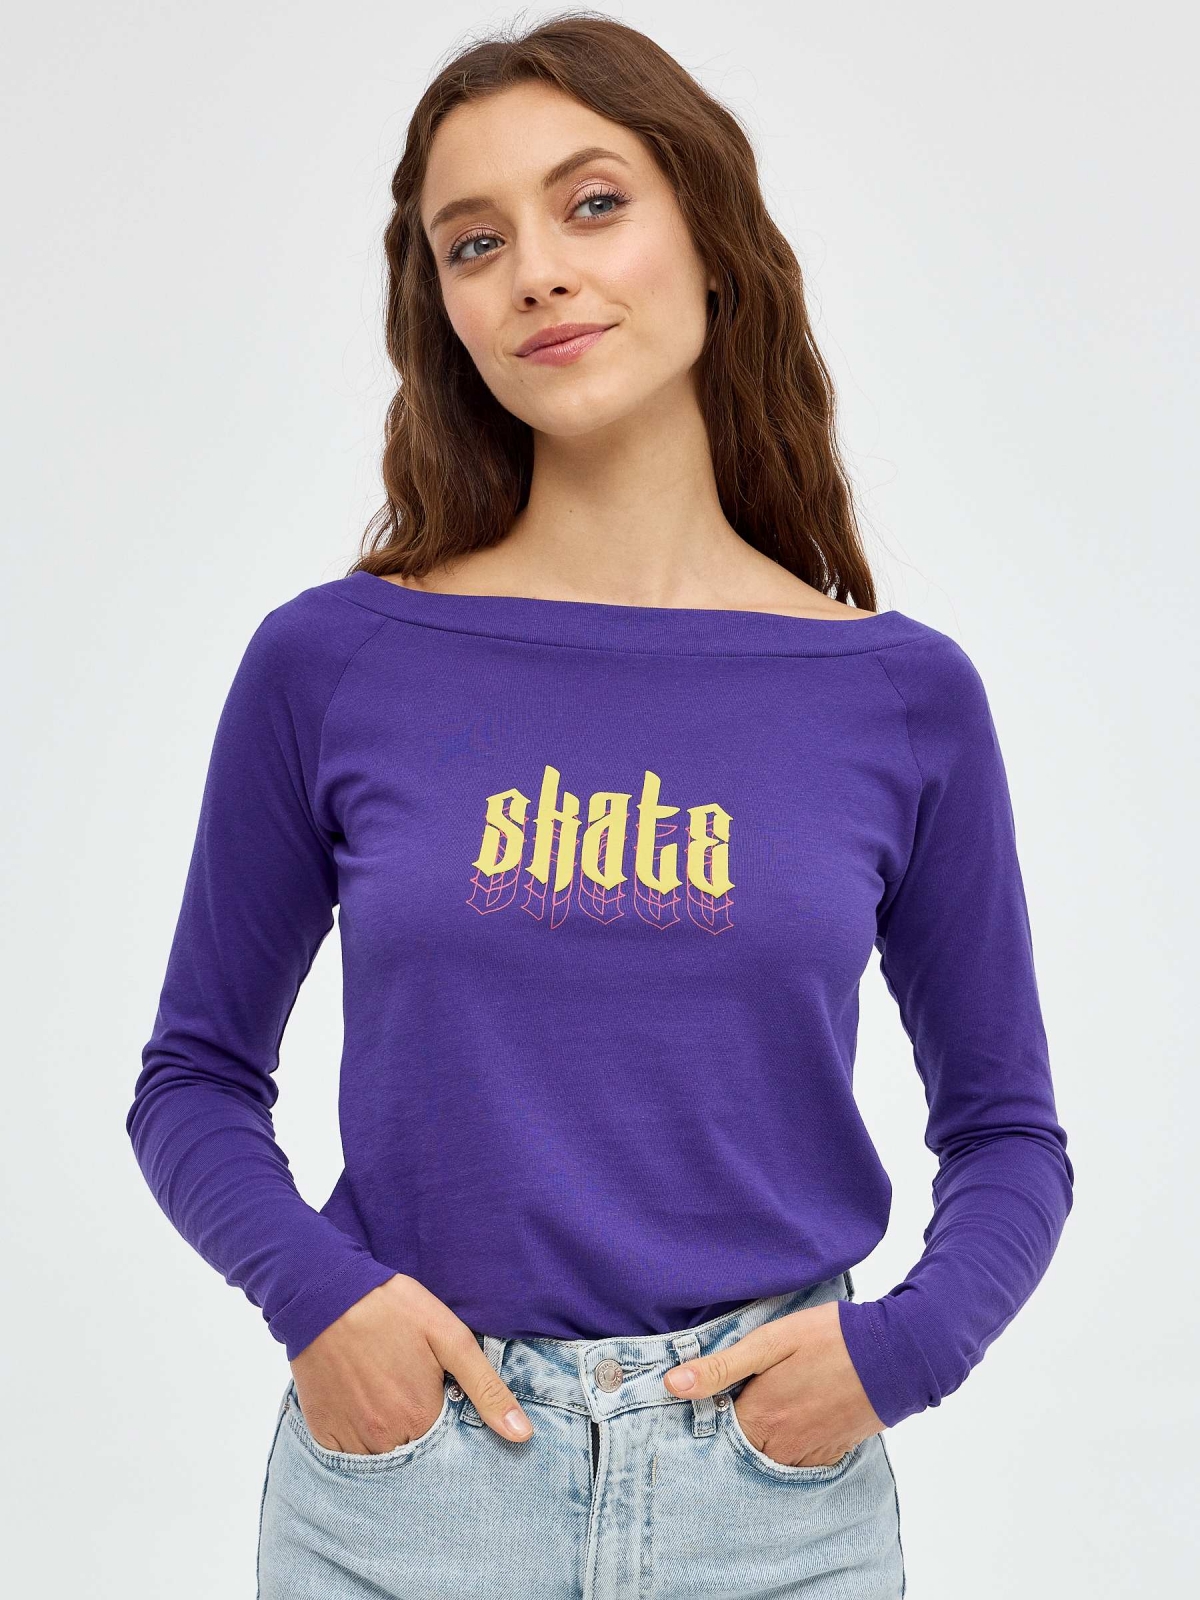 Skate boat T-shirt violet middle front view